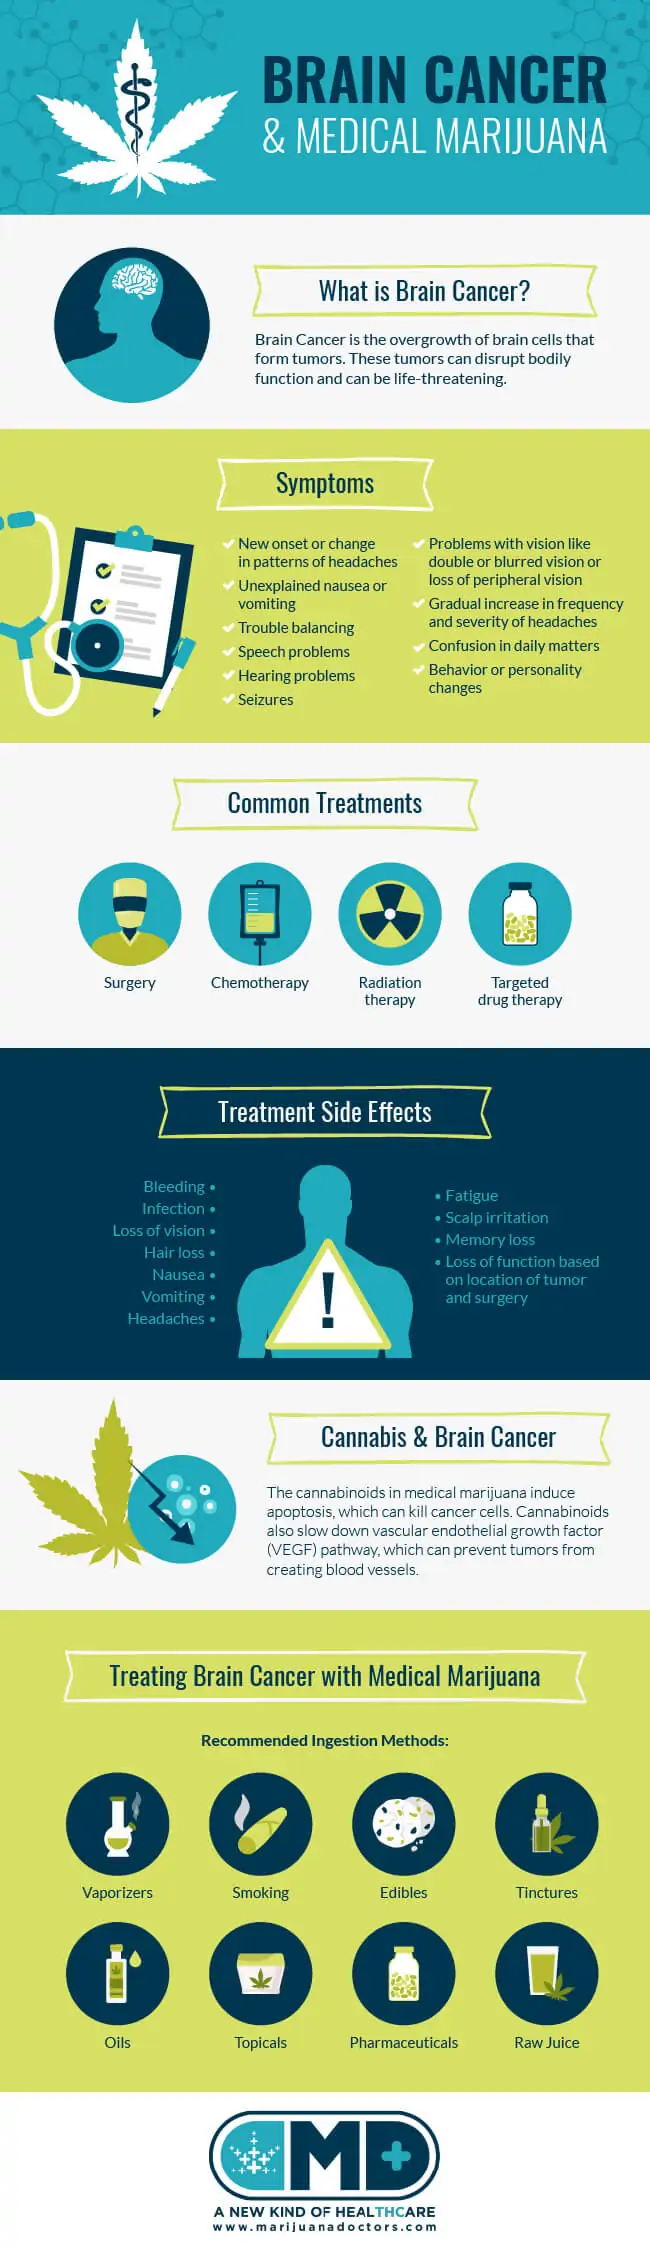 Medical Marijuana & Brain Cancer